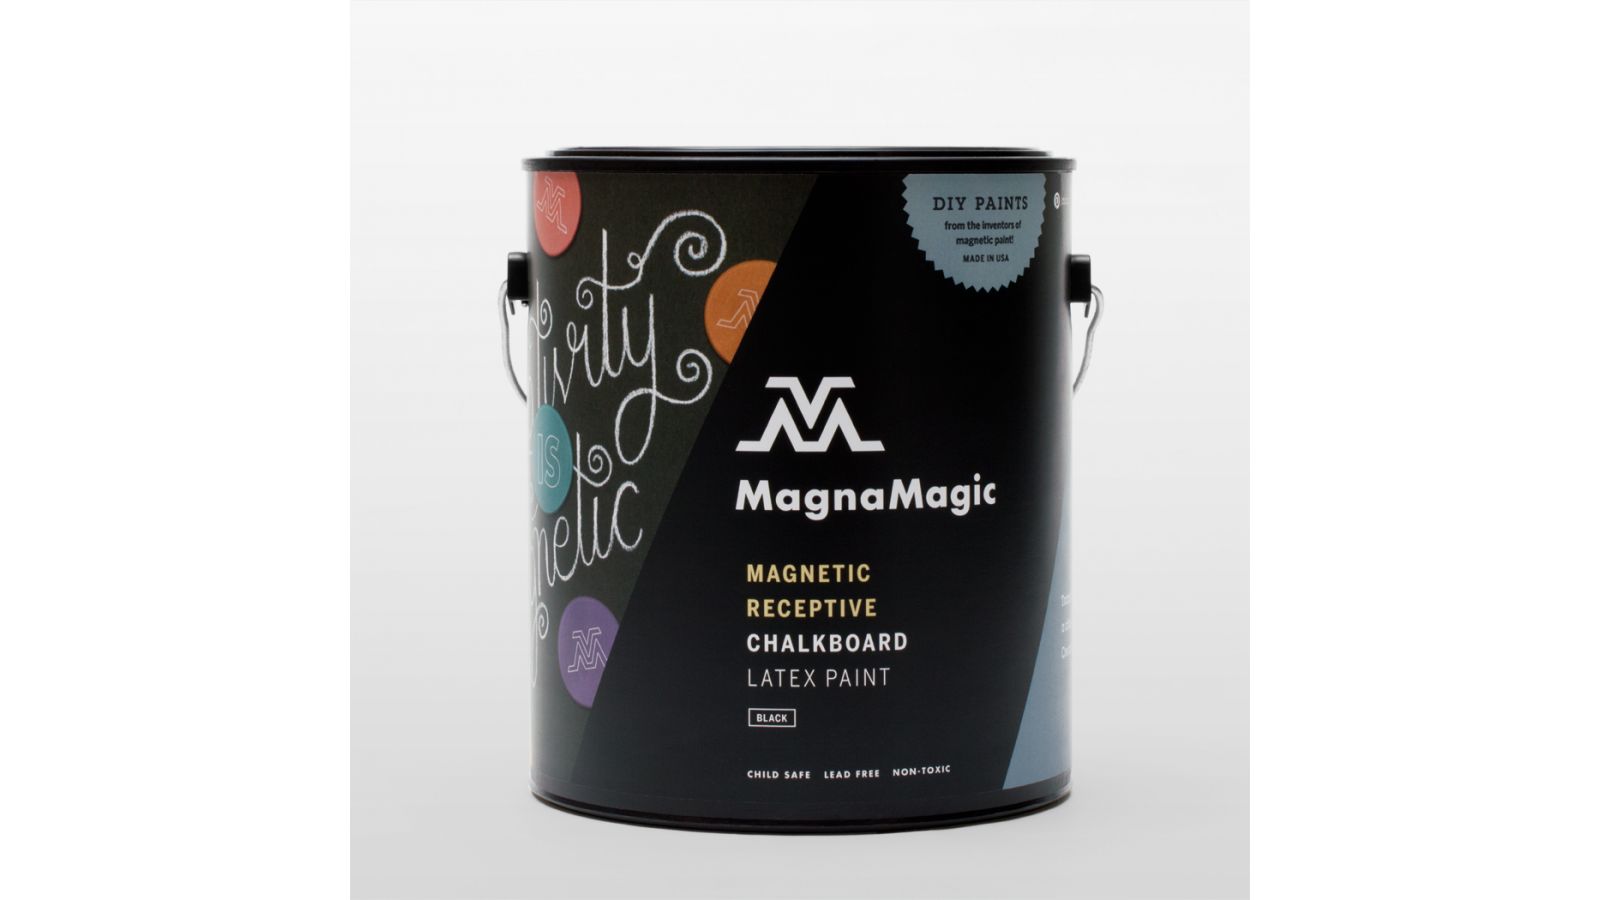 MagnaMagic Magnetic Receptive Chalkboard Paint